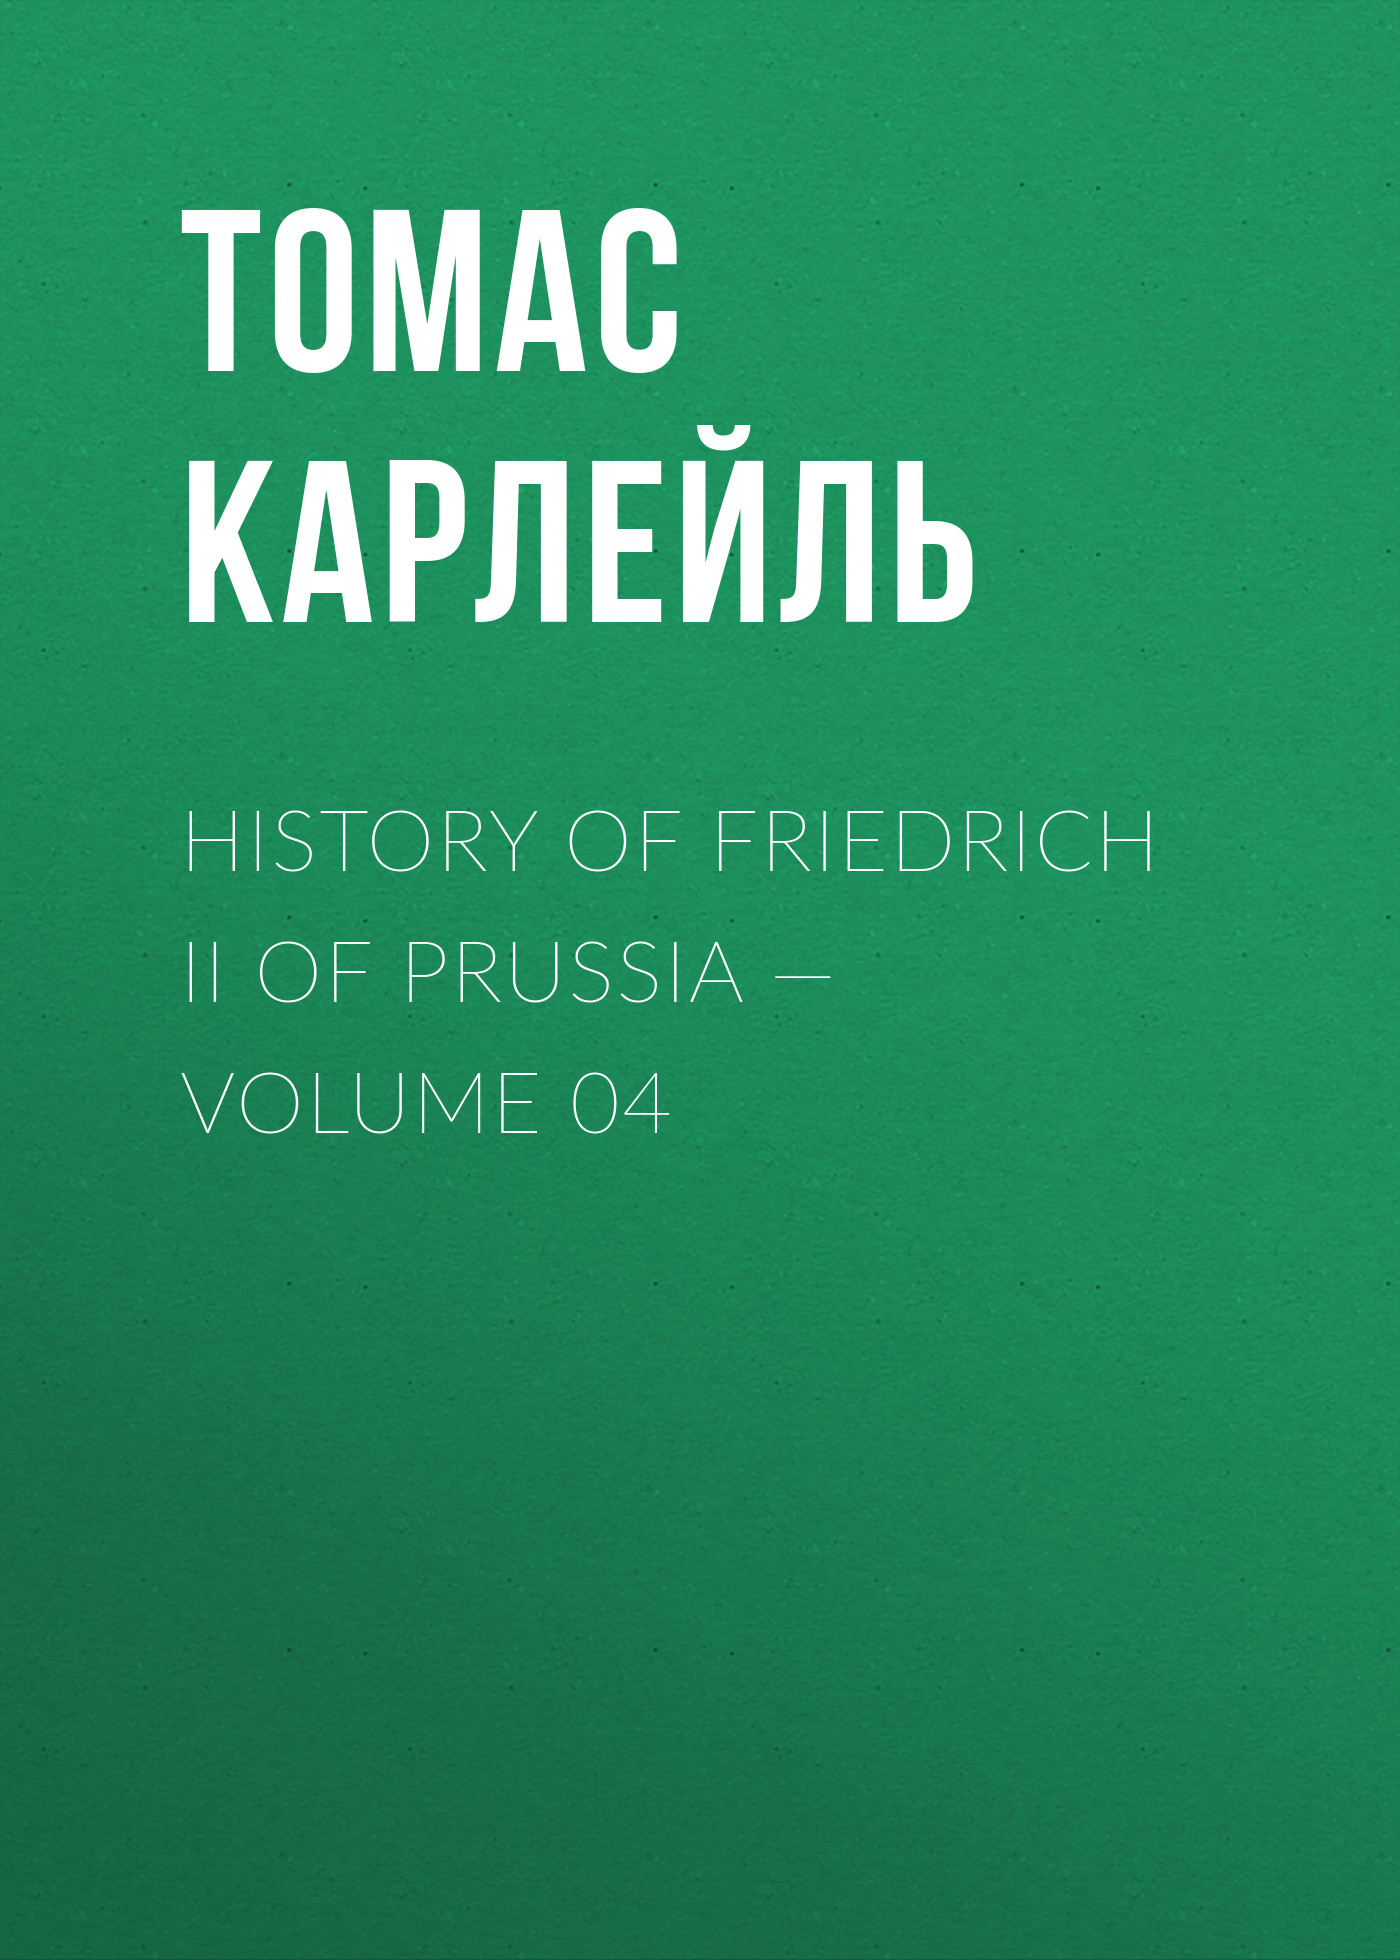 History of Friedrich II of Prussia— Volume 04